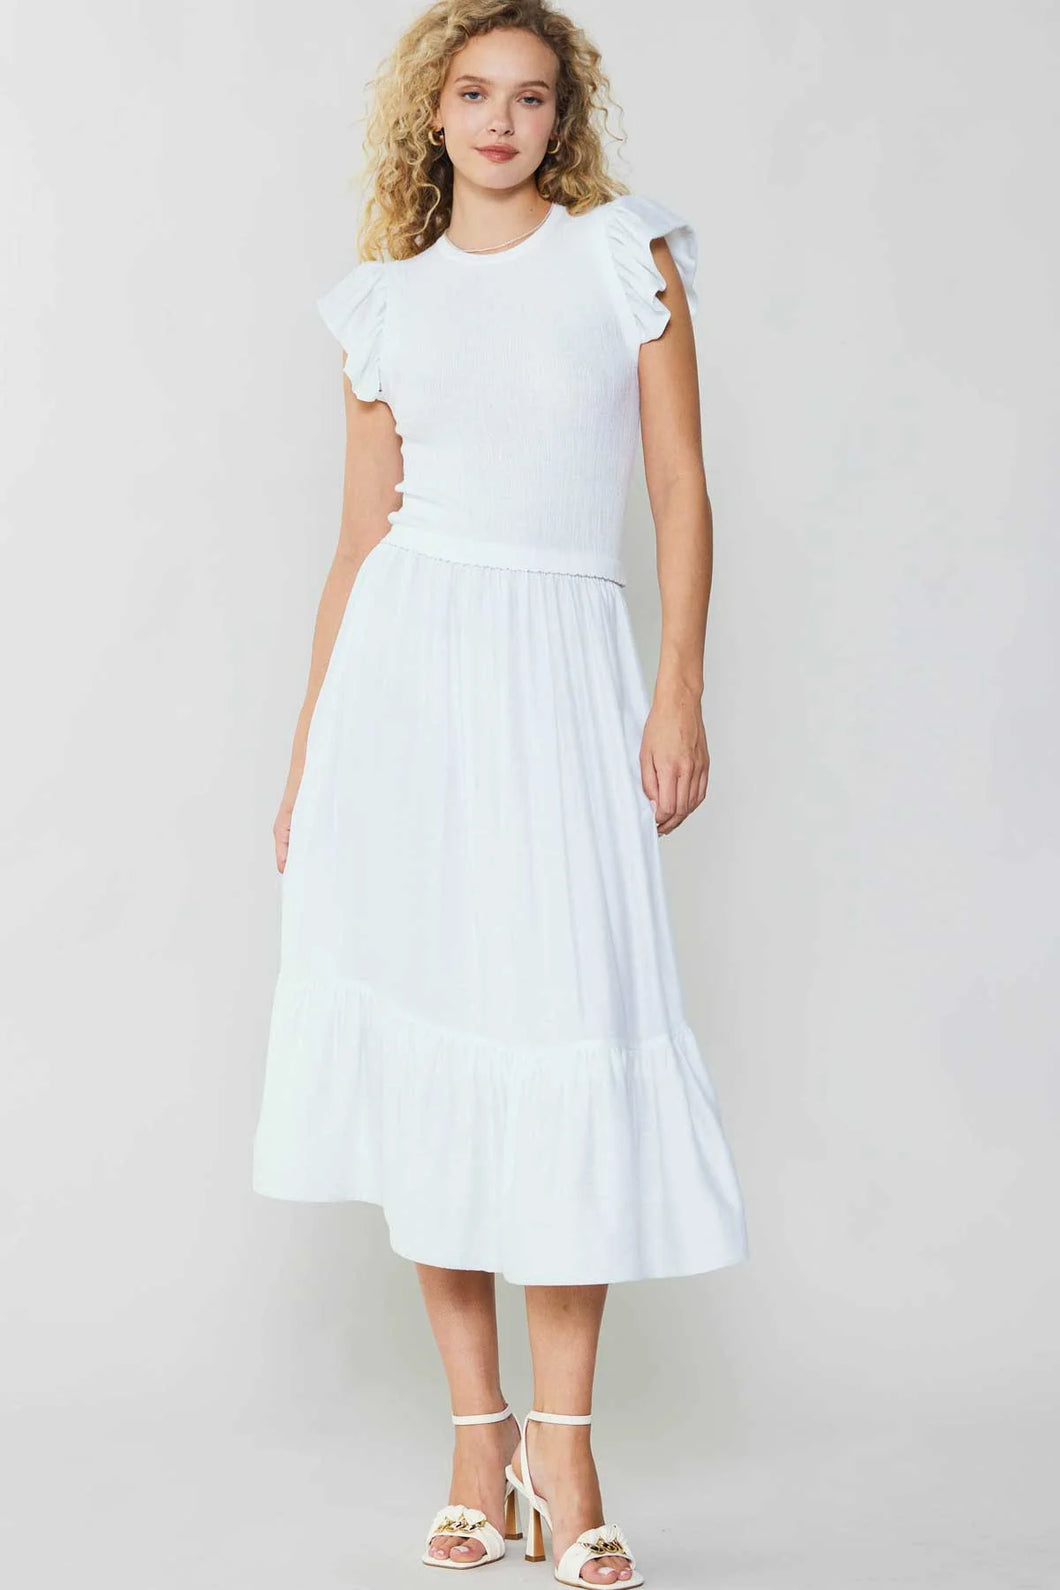 Short-sleeved white midi dress with ruffled hem. Sweater bodice, crew neckline, dropped waist, mid-length skirt. 